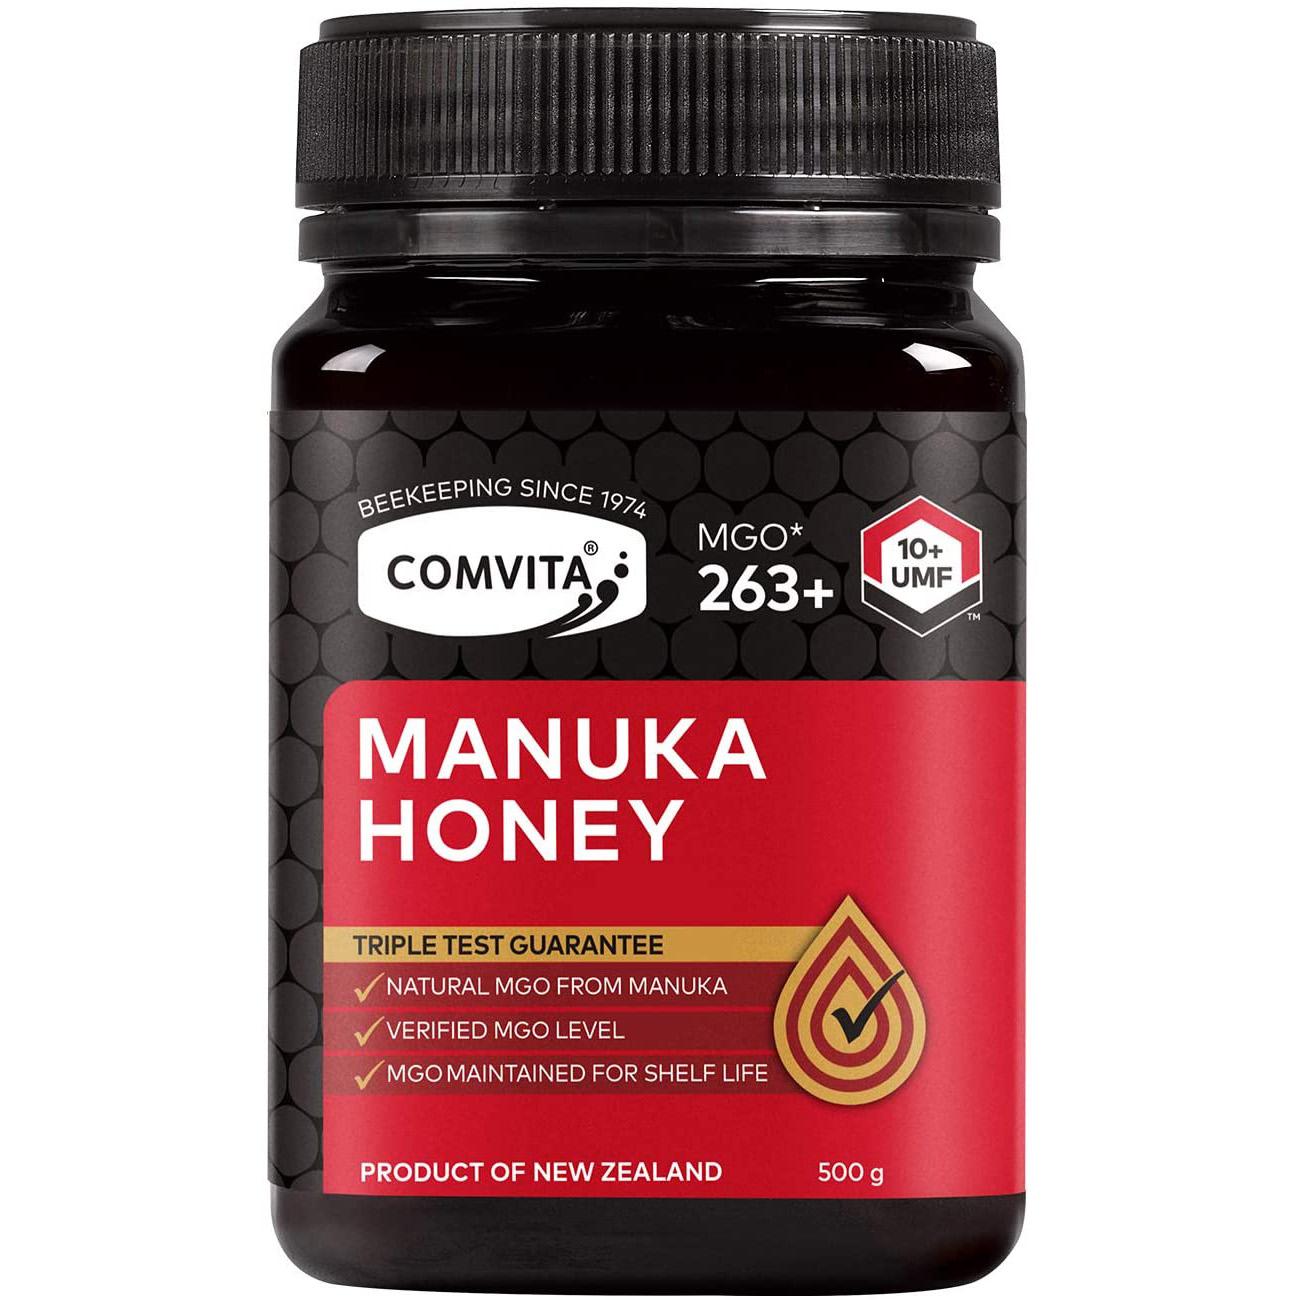 Comvita Certified UMF 10+ Raw Manuka Honey for $28.49 Shipped